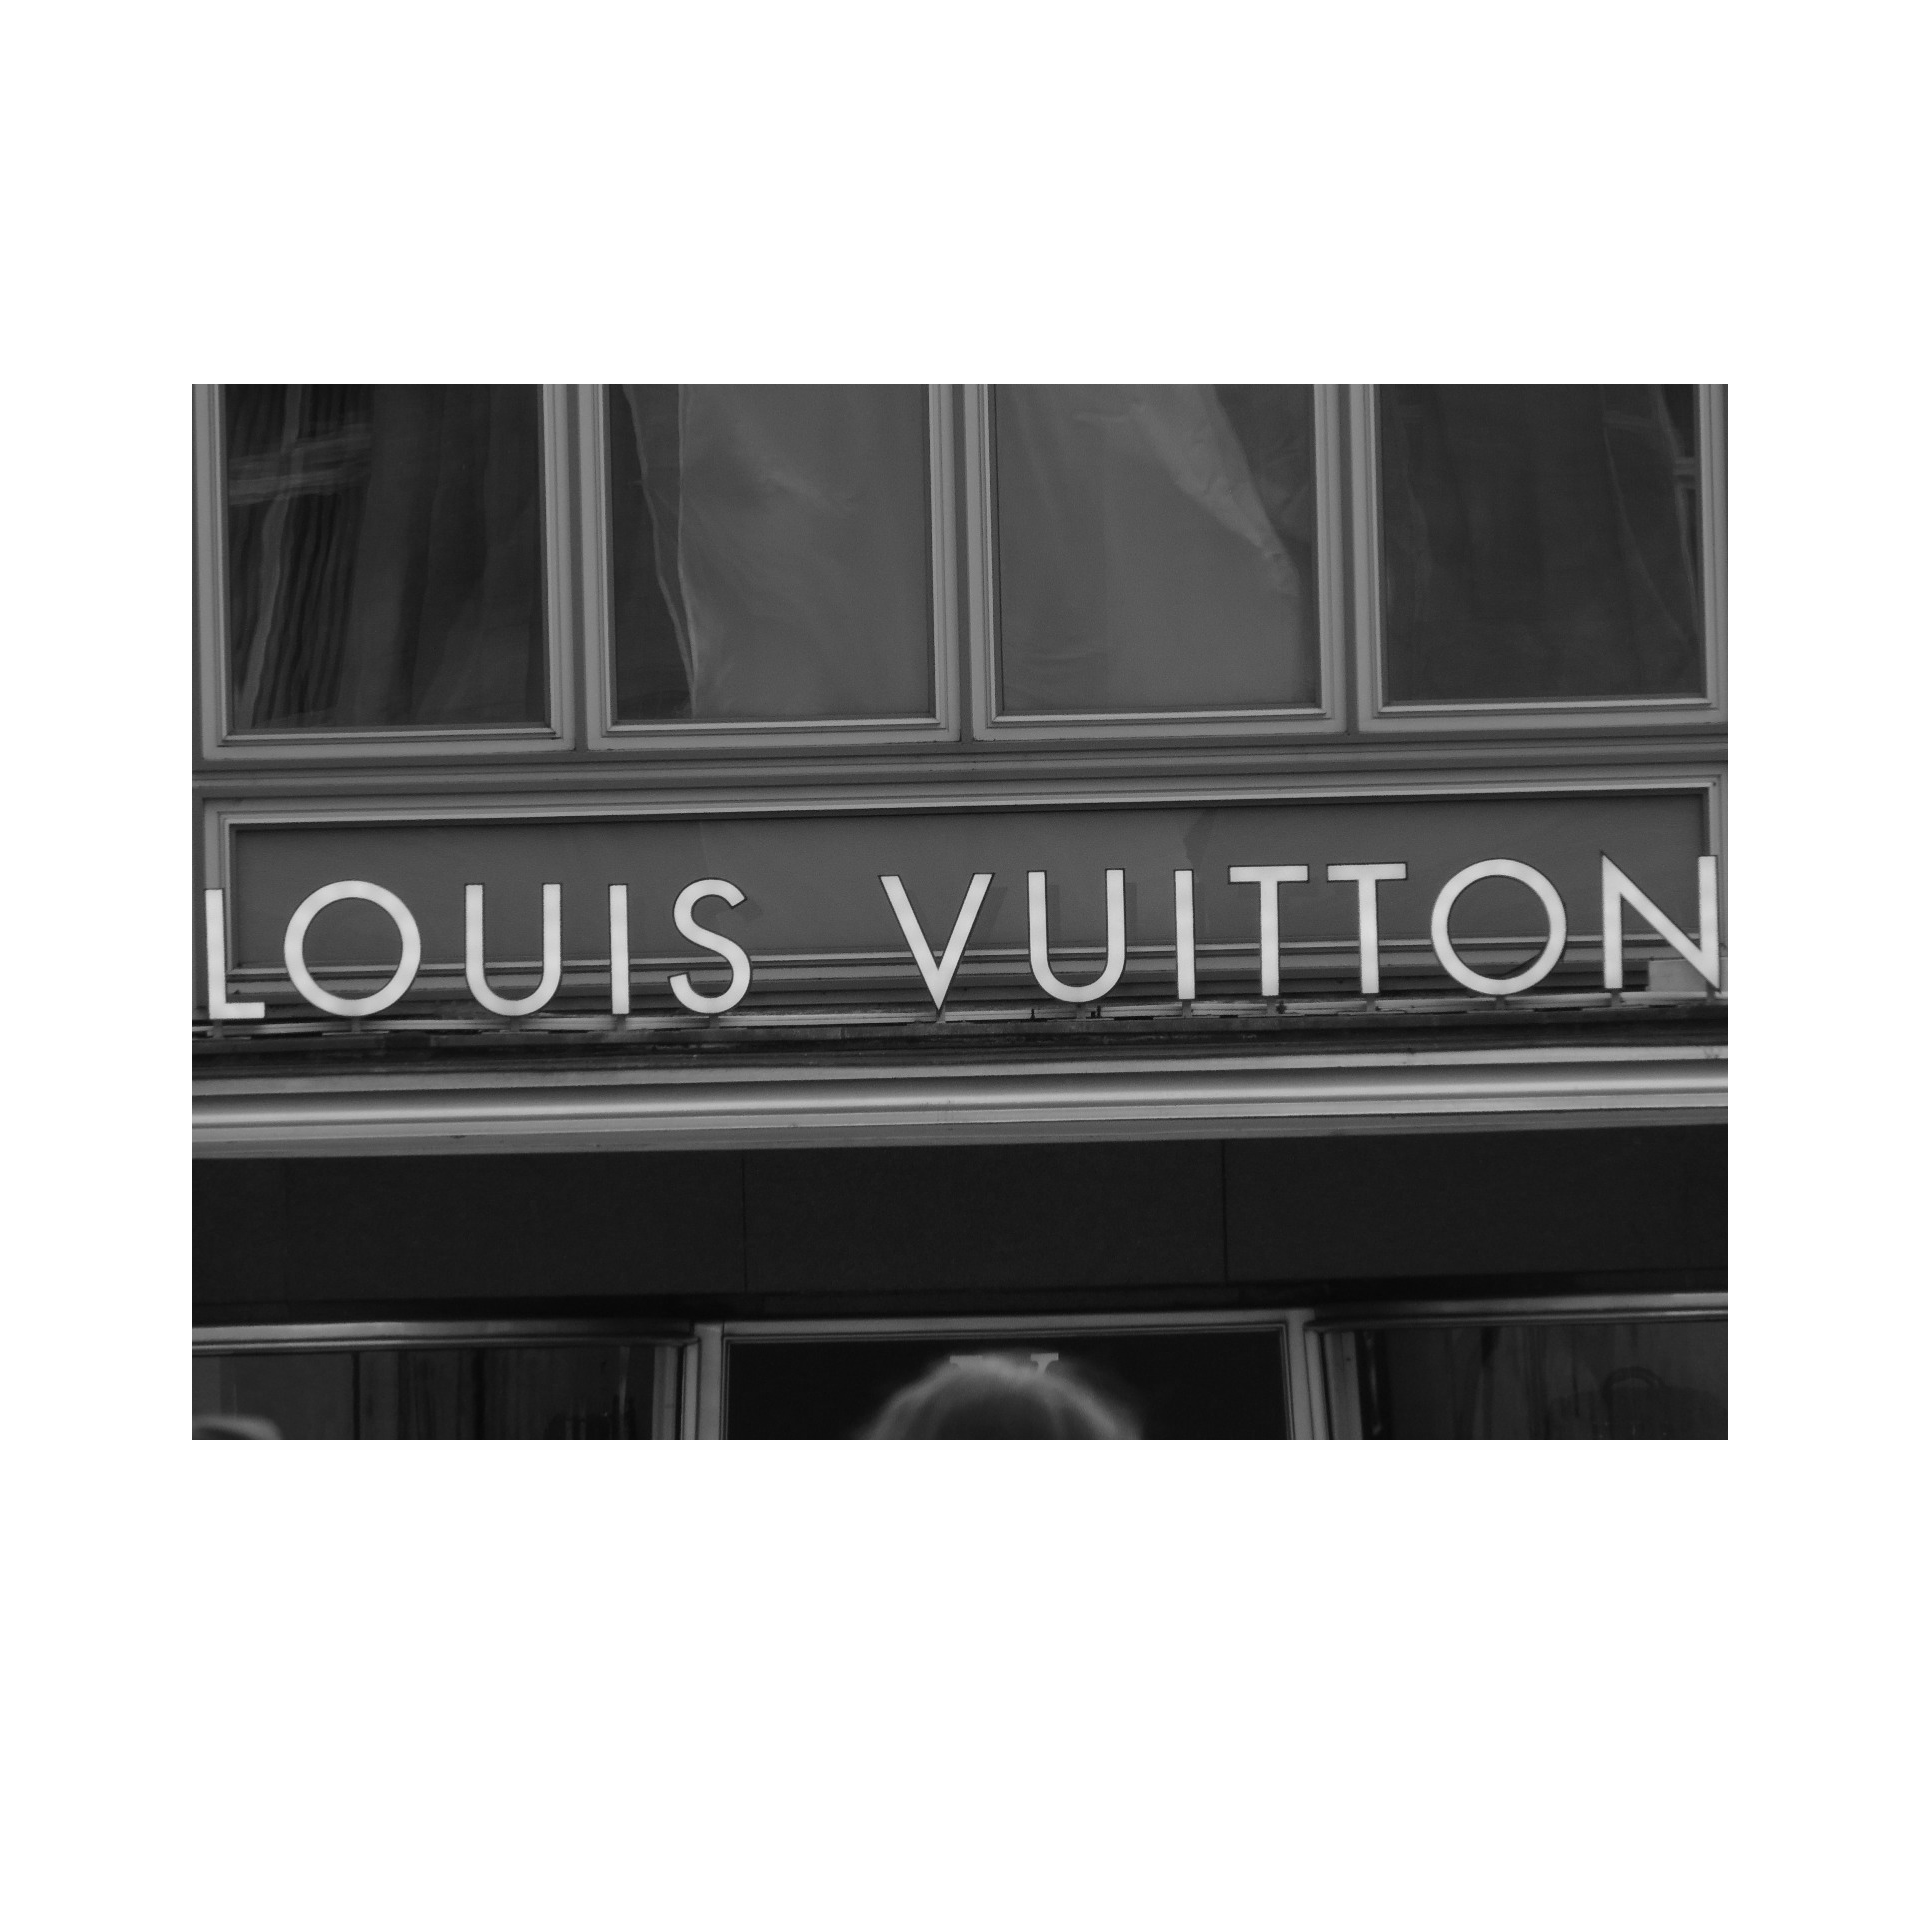 Louis Vuitton Shop Shopping Monochrome 1920x1920